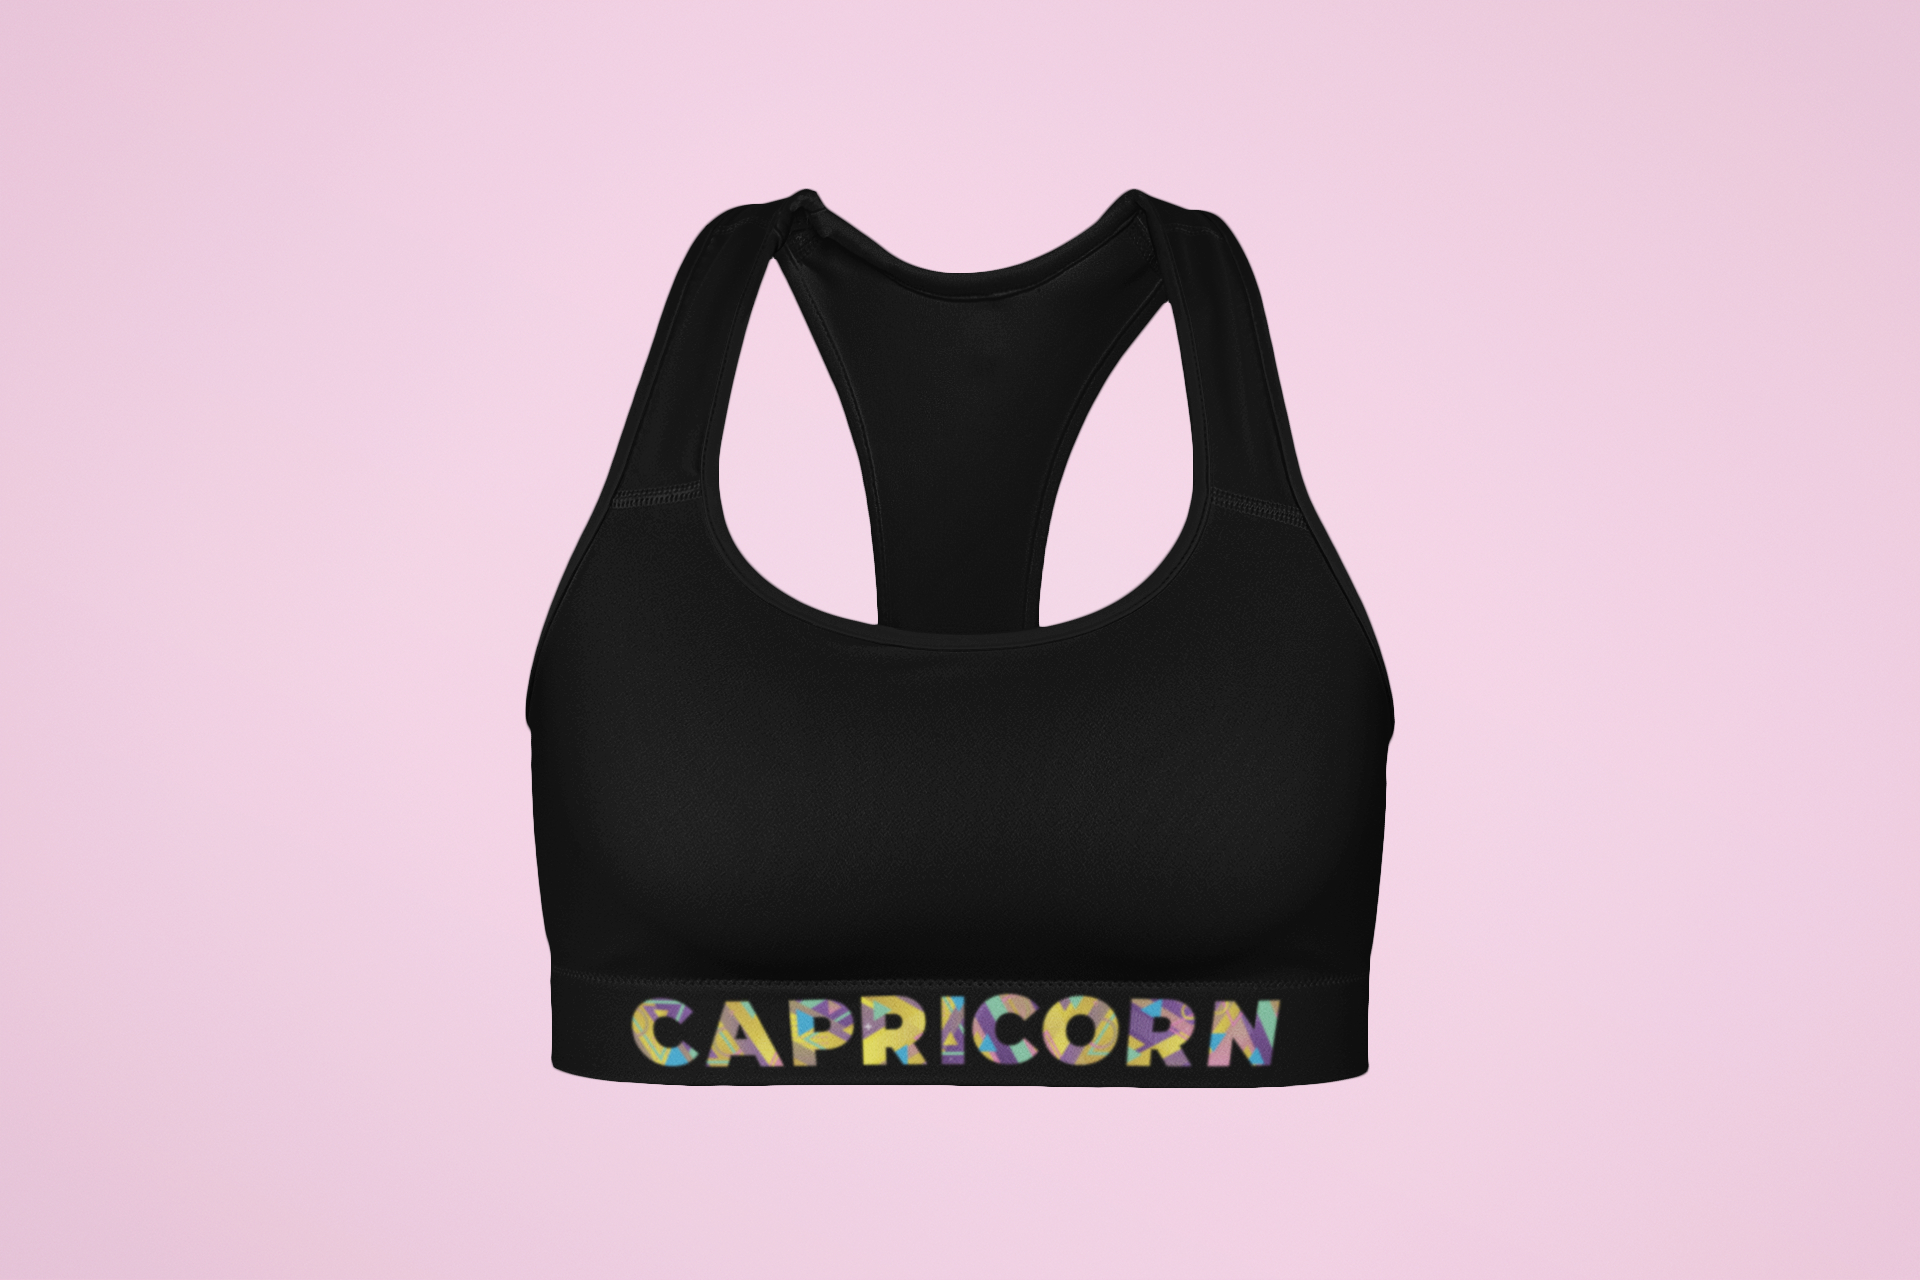 Capricorn Black Sports bra